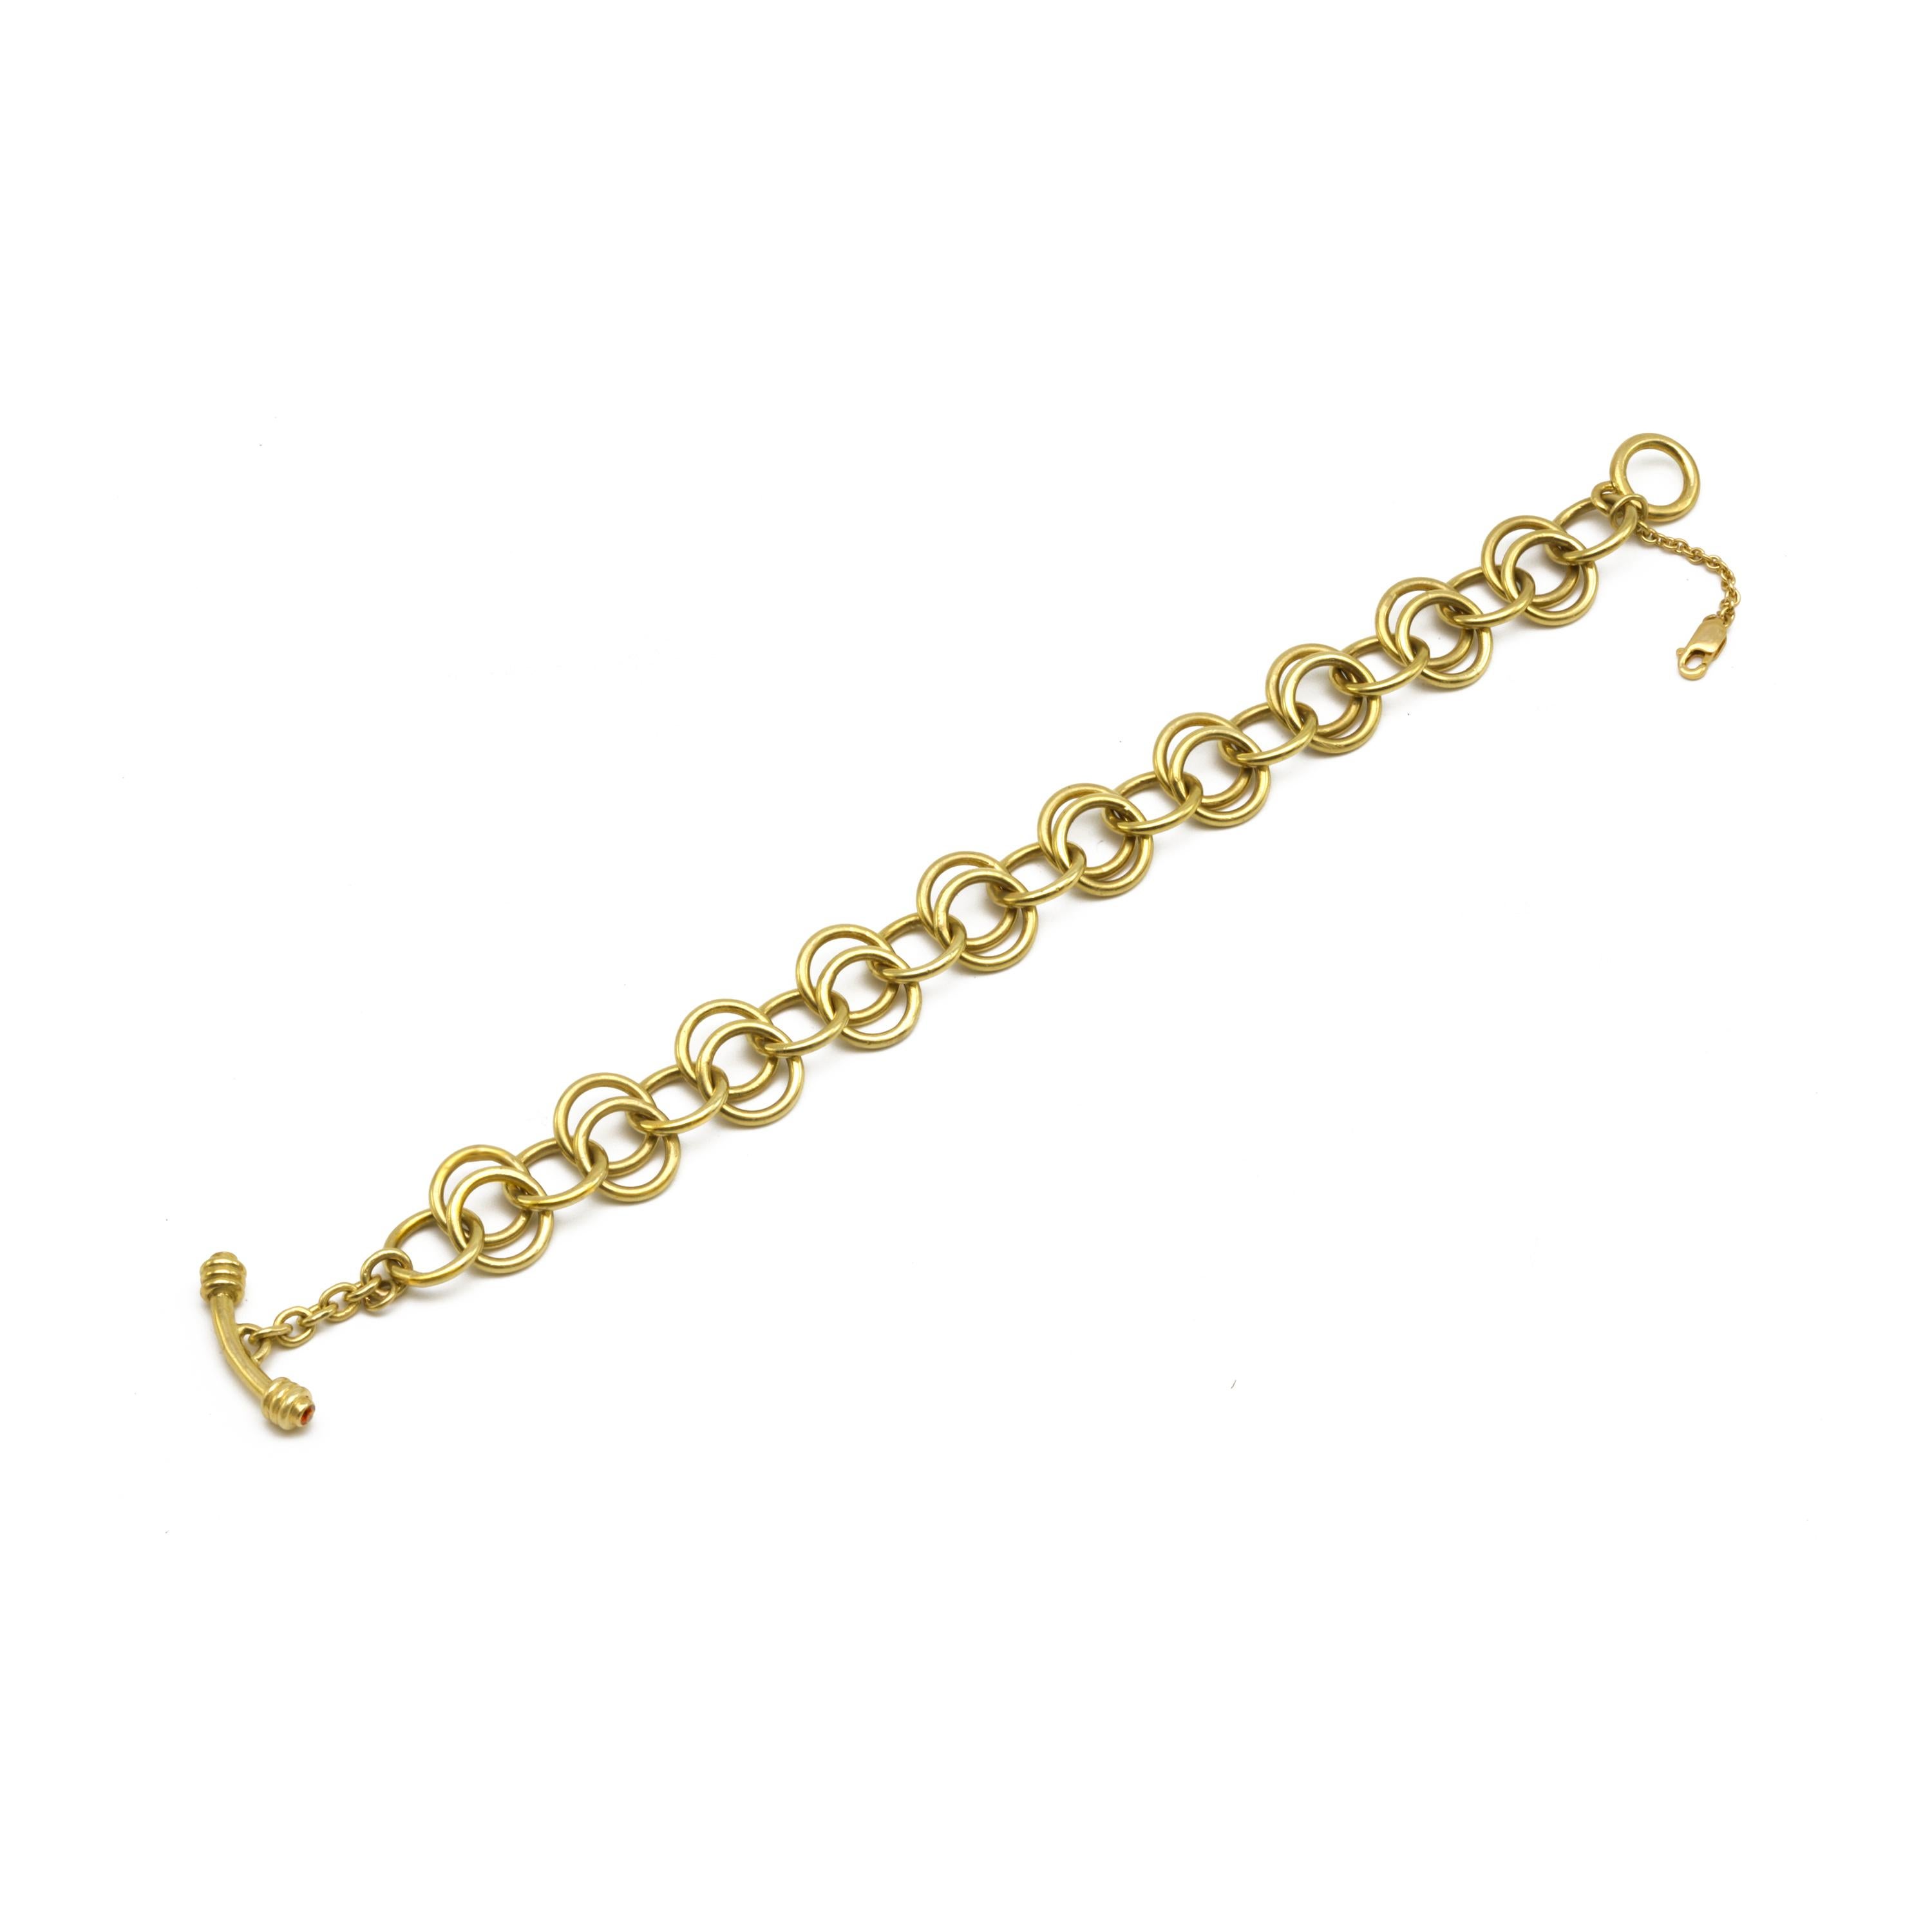 Artisan Diana Kim England Handmade Charm Chain in 18 Karat Gold with Ruby Toggle For Sale